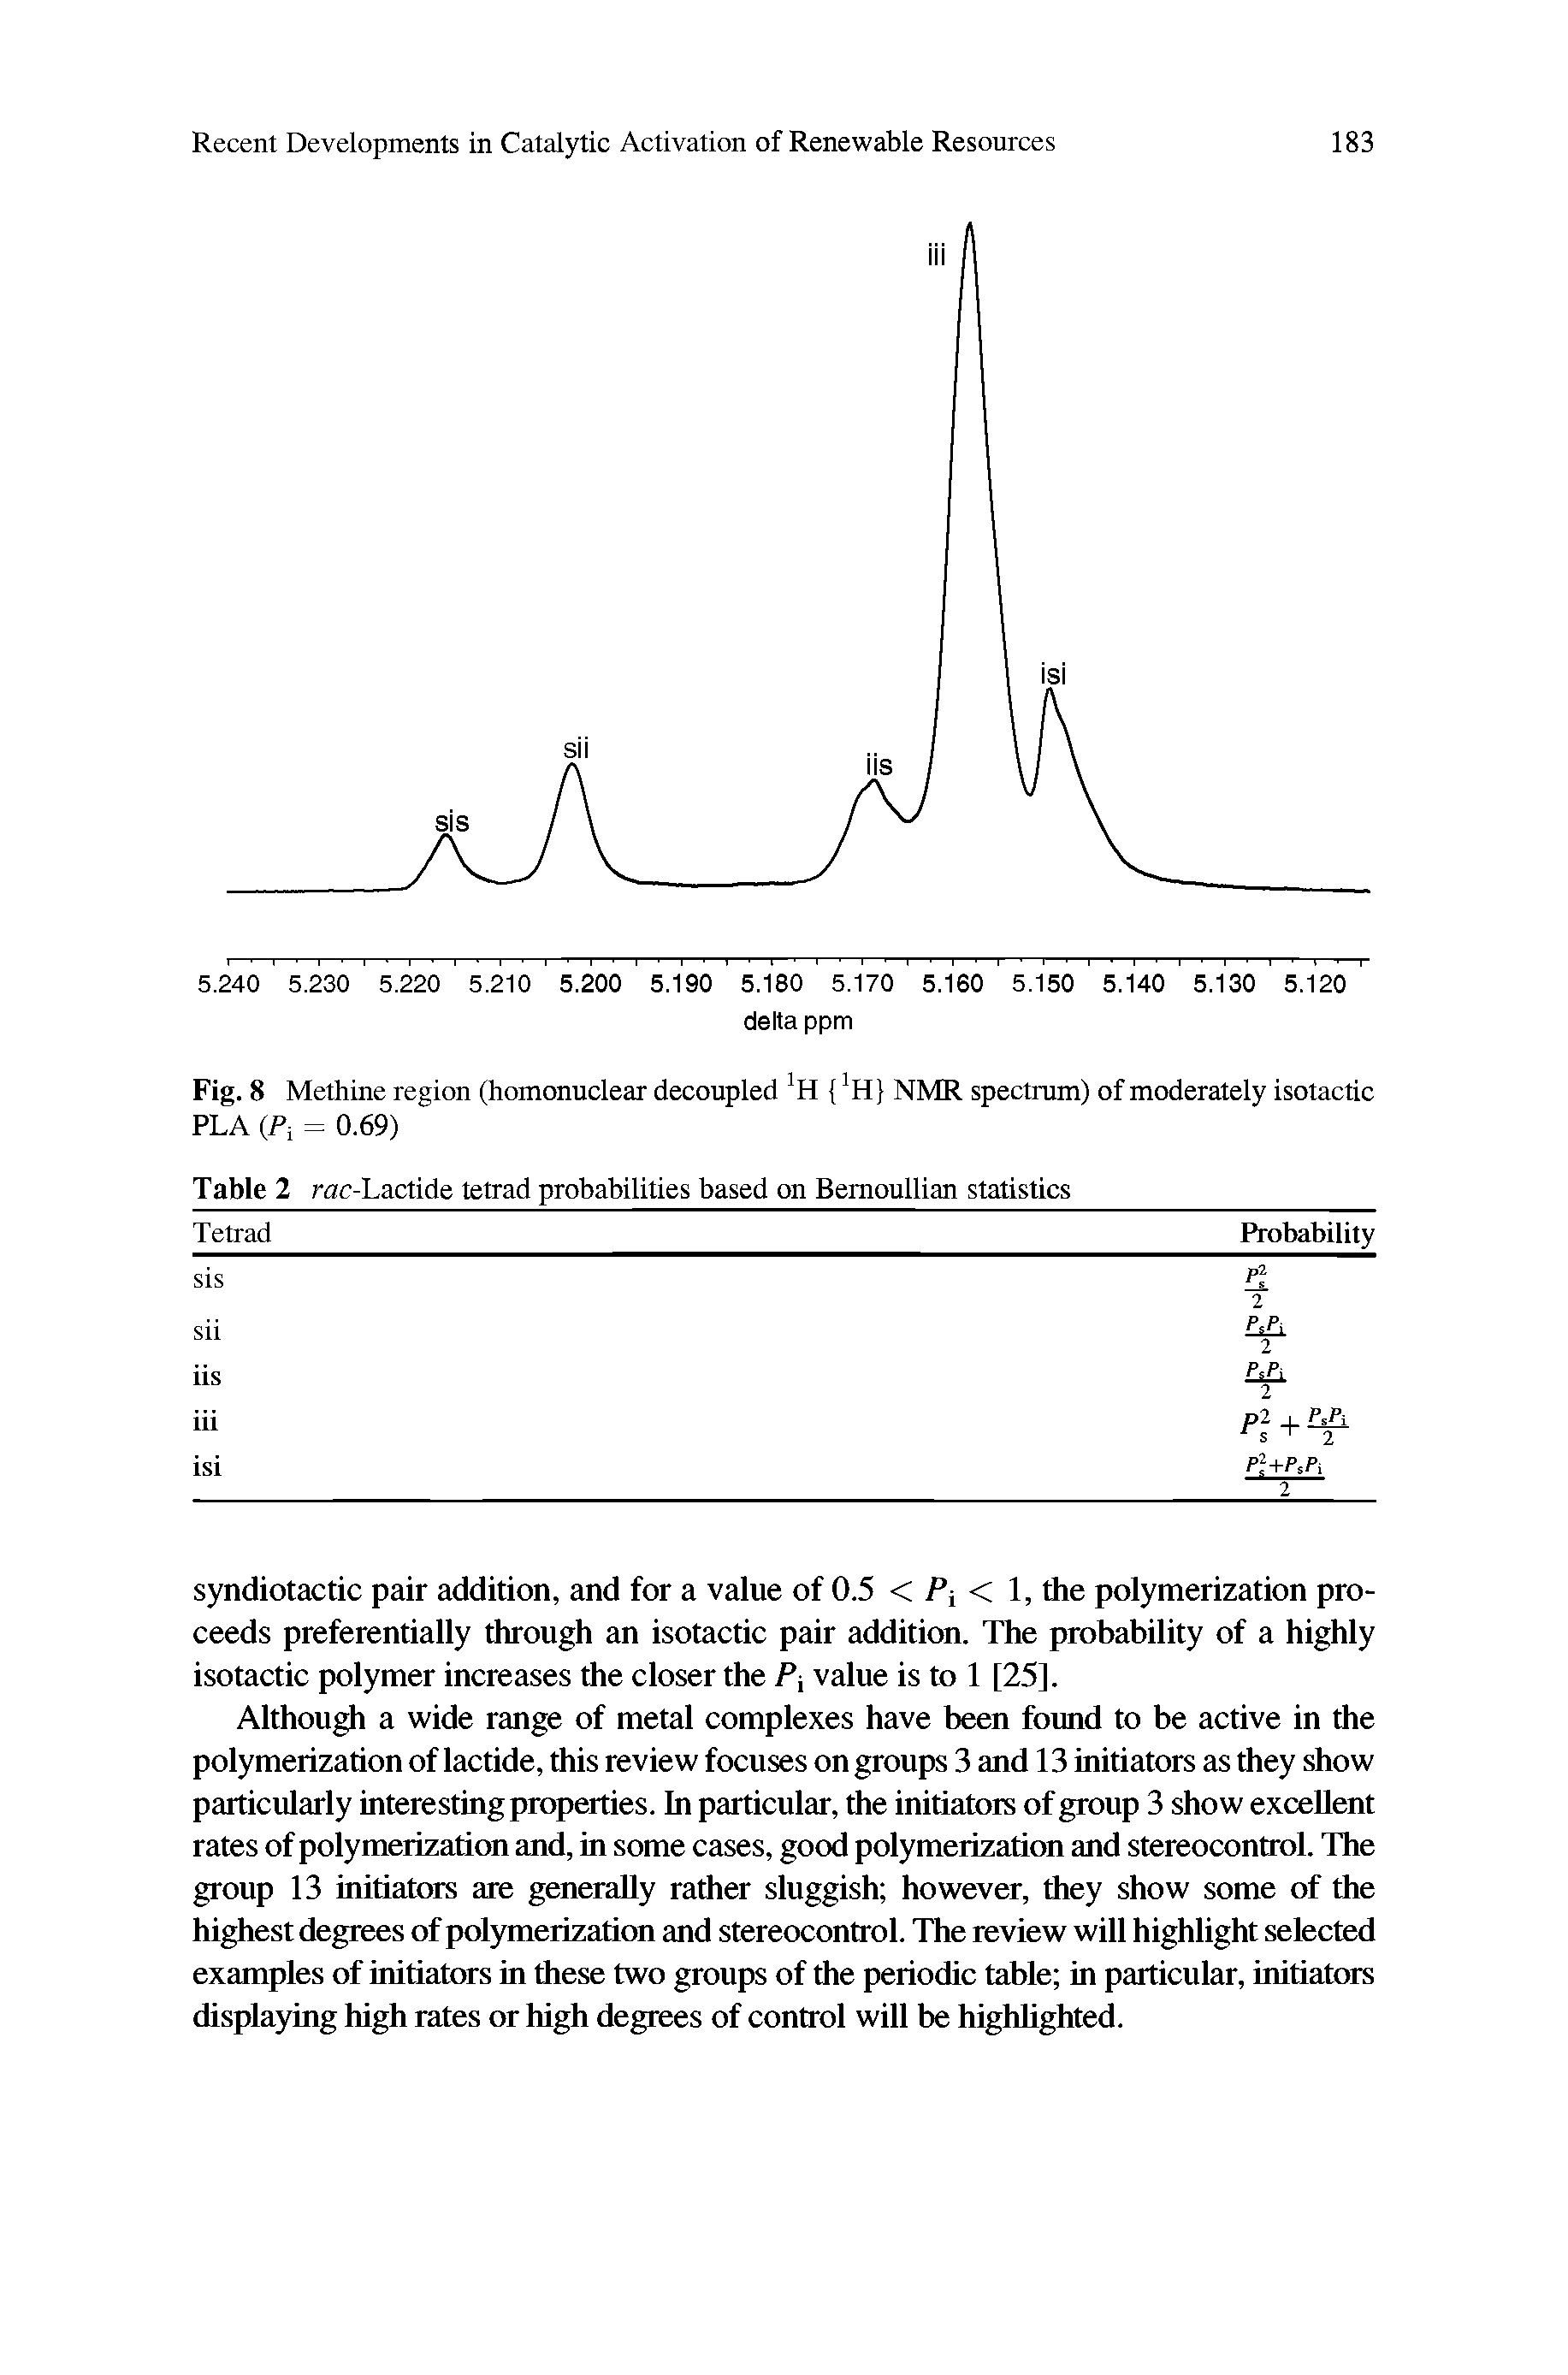 Fig. 8 Methine region (homonuclear decoupled 1H NMR spectrum) of moderately isotactic PLA (Pi = 0.69) Table 2 rac-Lactide tetrad probabilities based on Bemoullian statistics ...